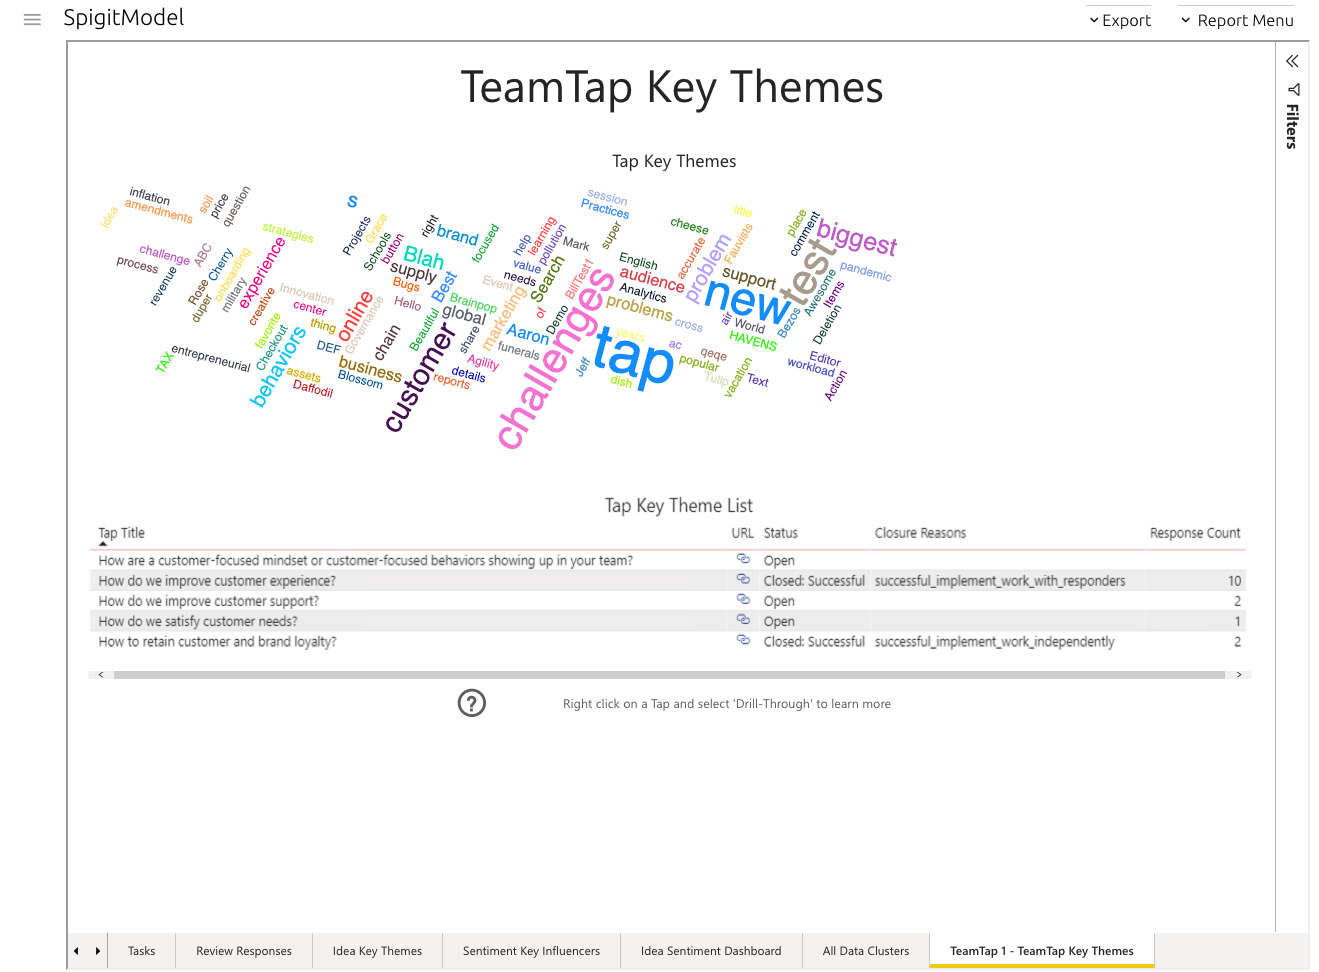 TeamTap 1 - TeamTap Key Themes.png